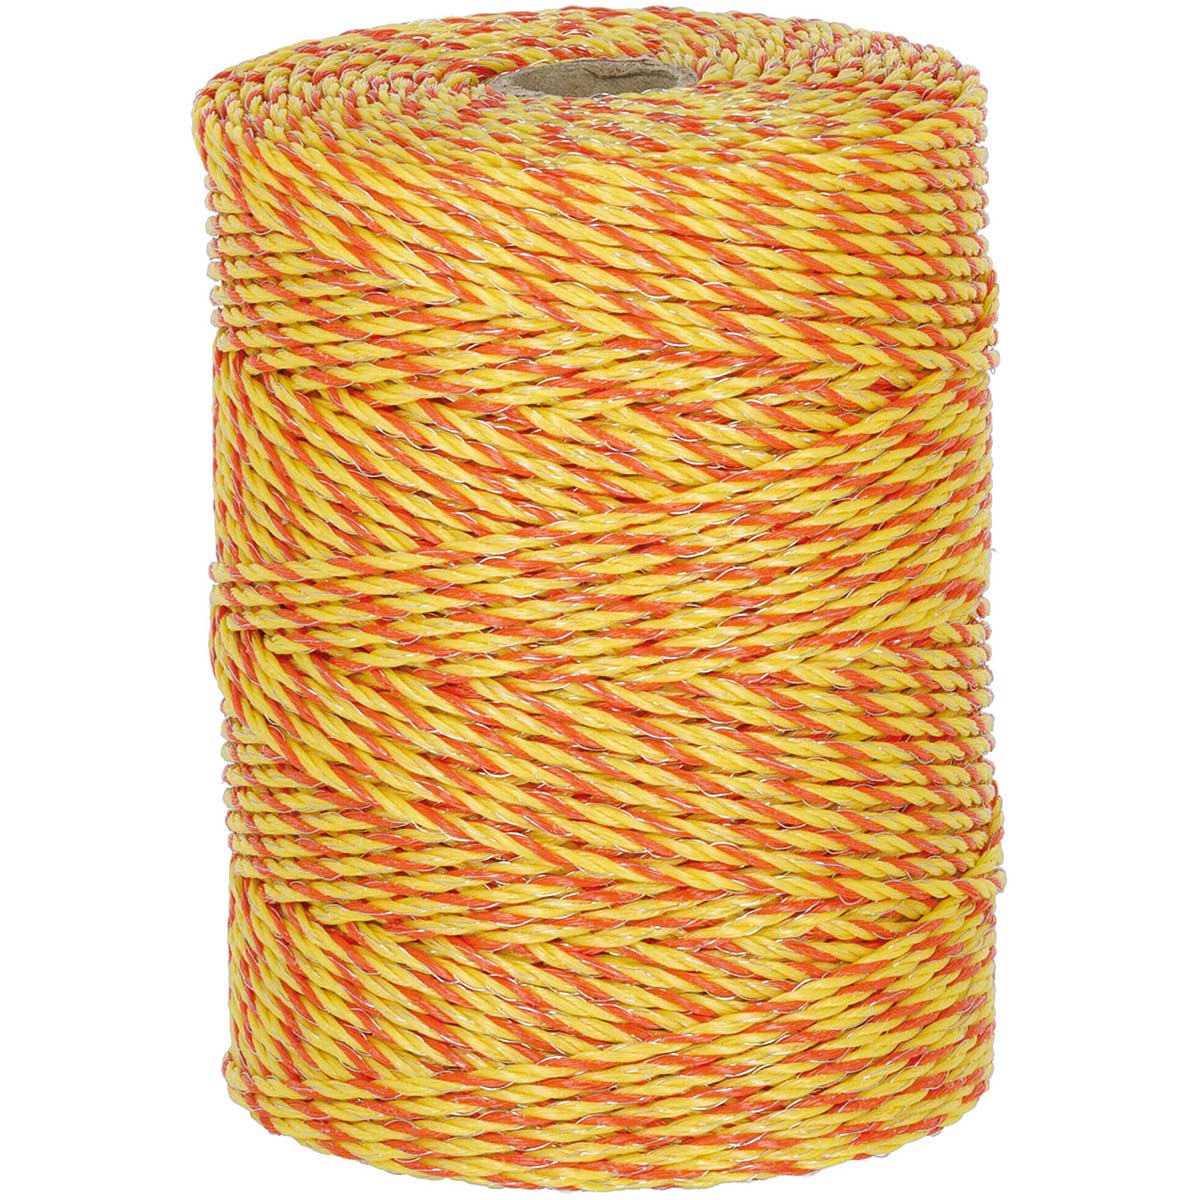 Agrarzone Polywire Basic 3x0.20 Niro, yellow-orange 250 m